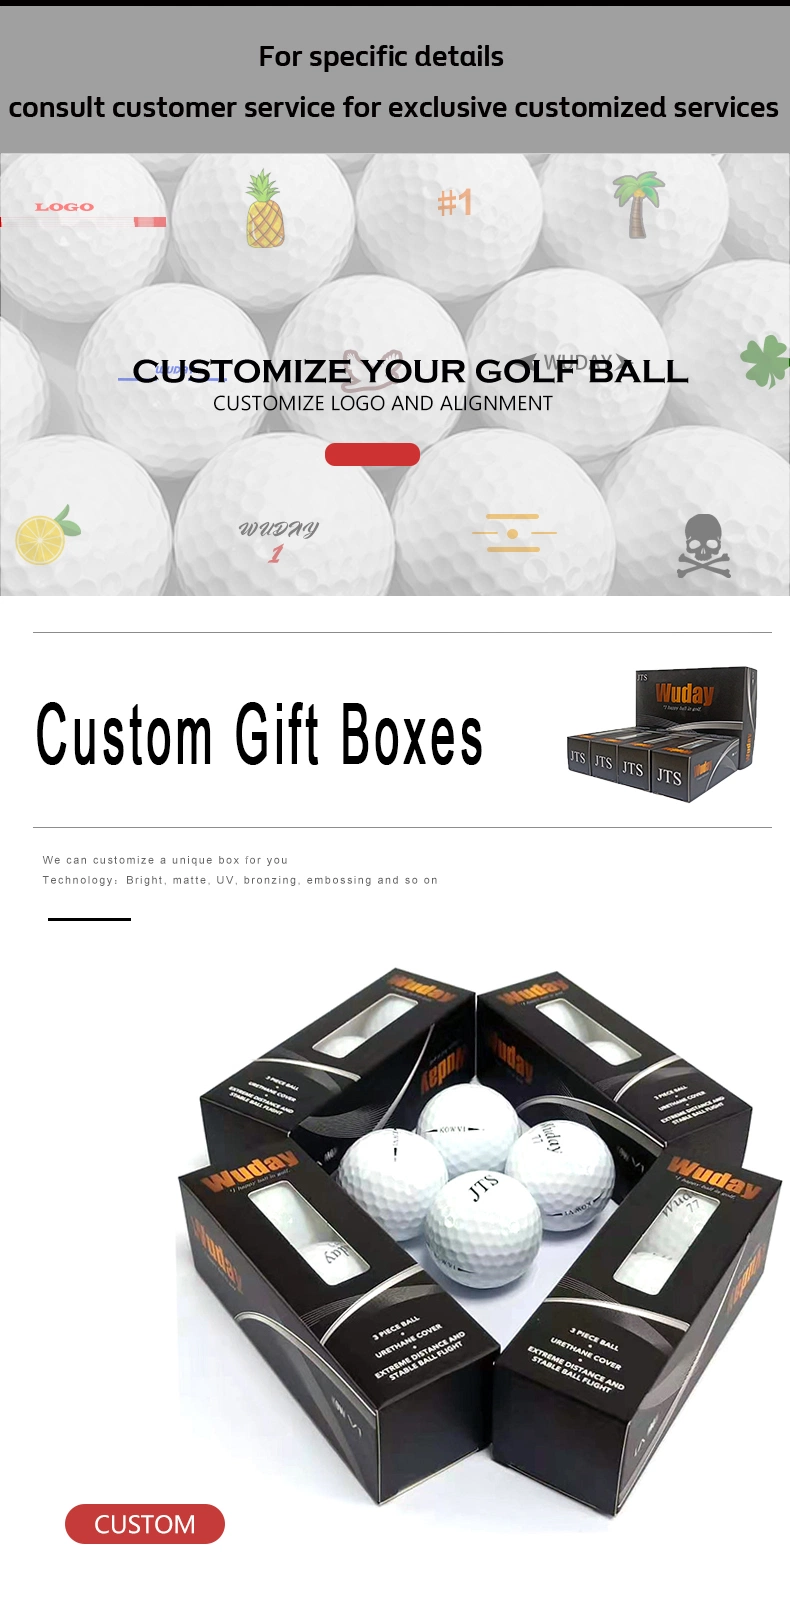 China Trade Golf Balls 3 Piece Printing Logo Colorful Urethane Crystal Golf Balls with Golf Box